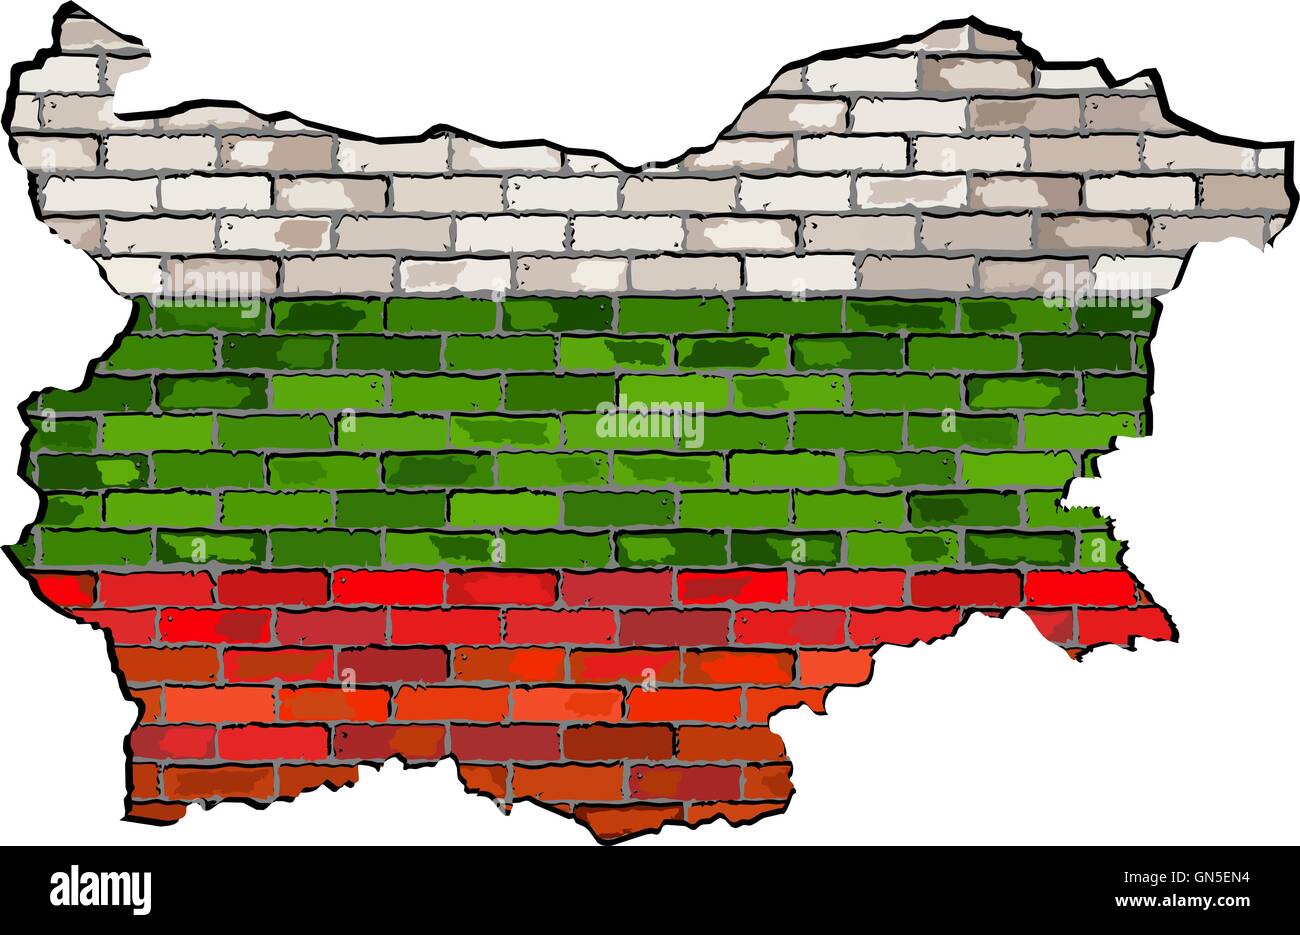 Bulgaria map on a brick wall Stock Vector